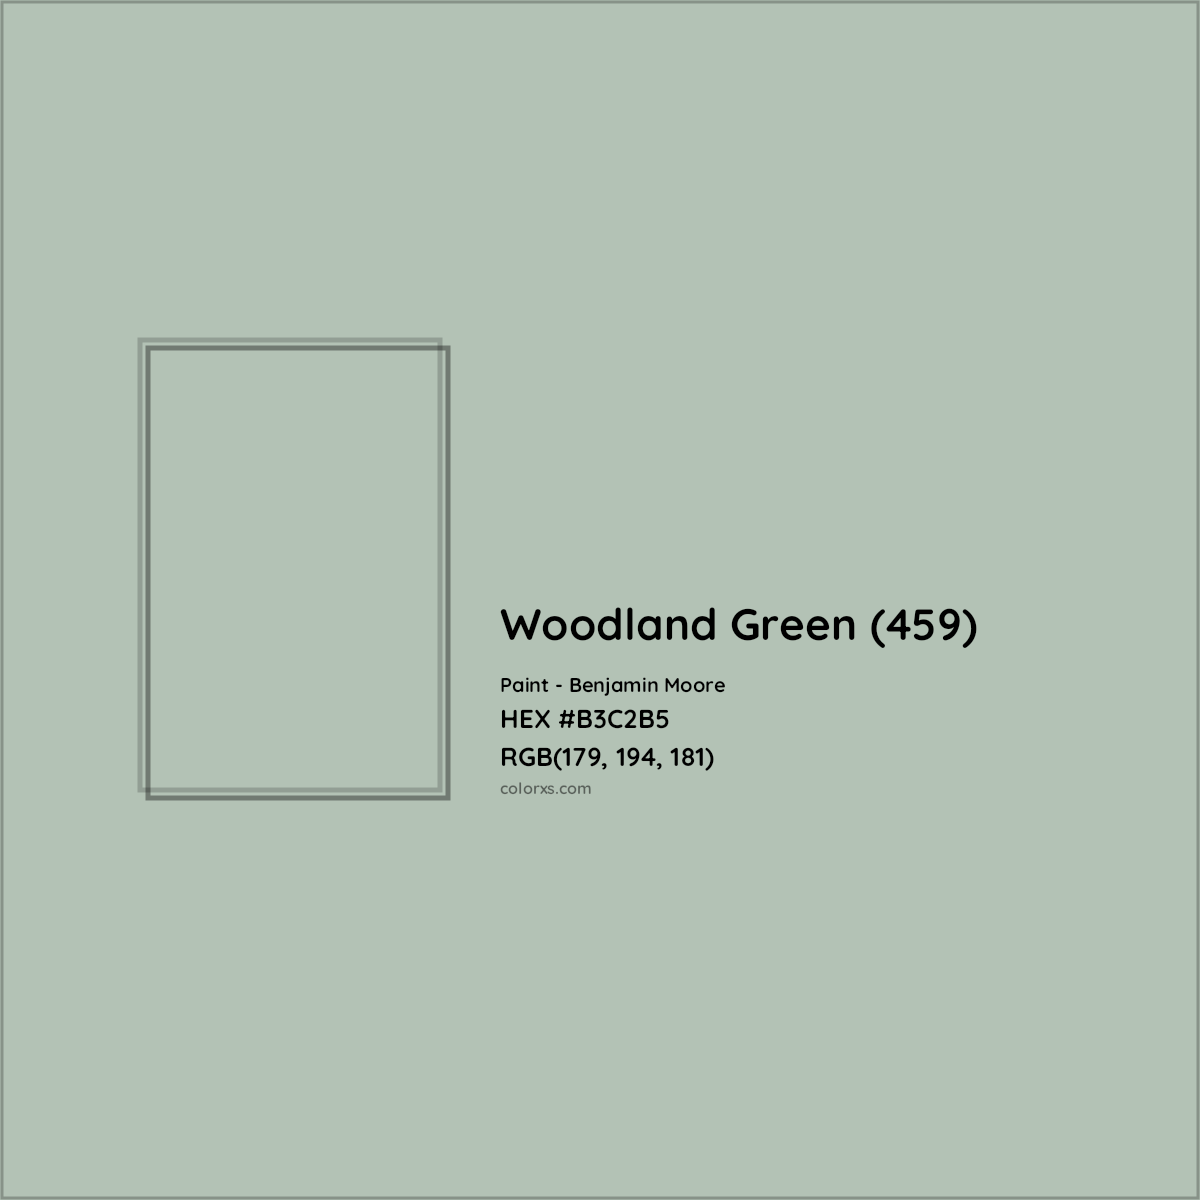 Woodland Green 459